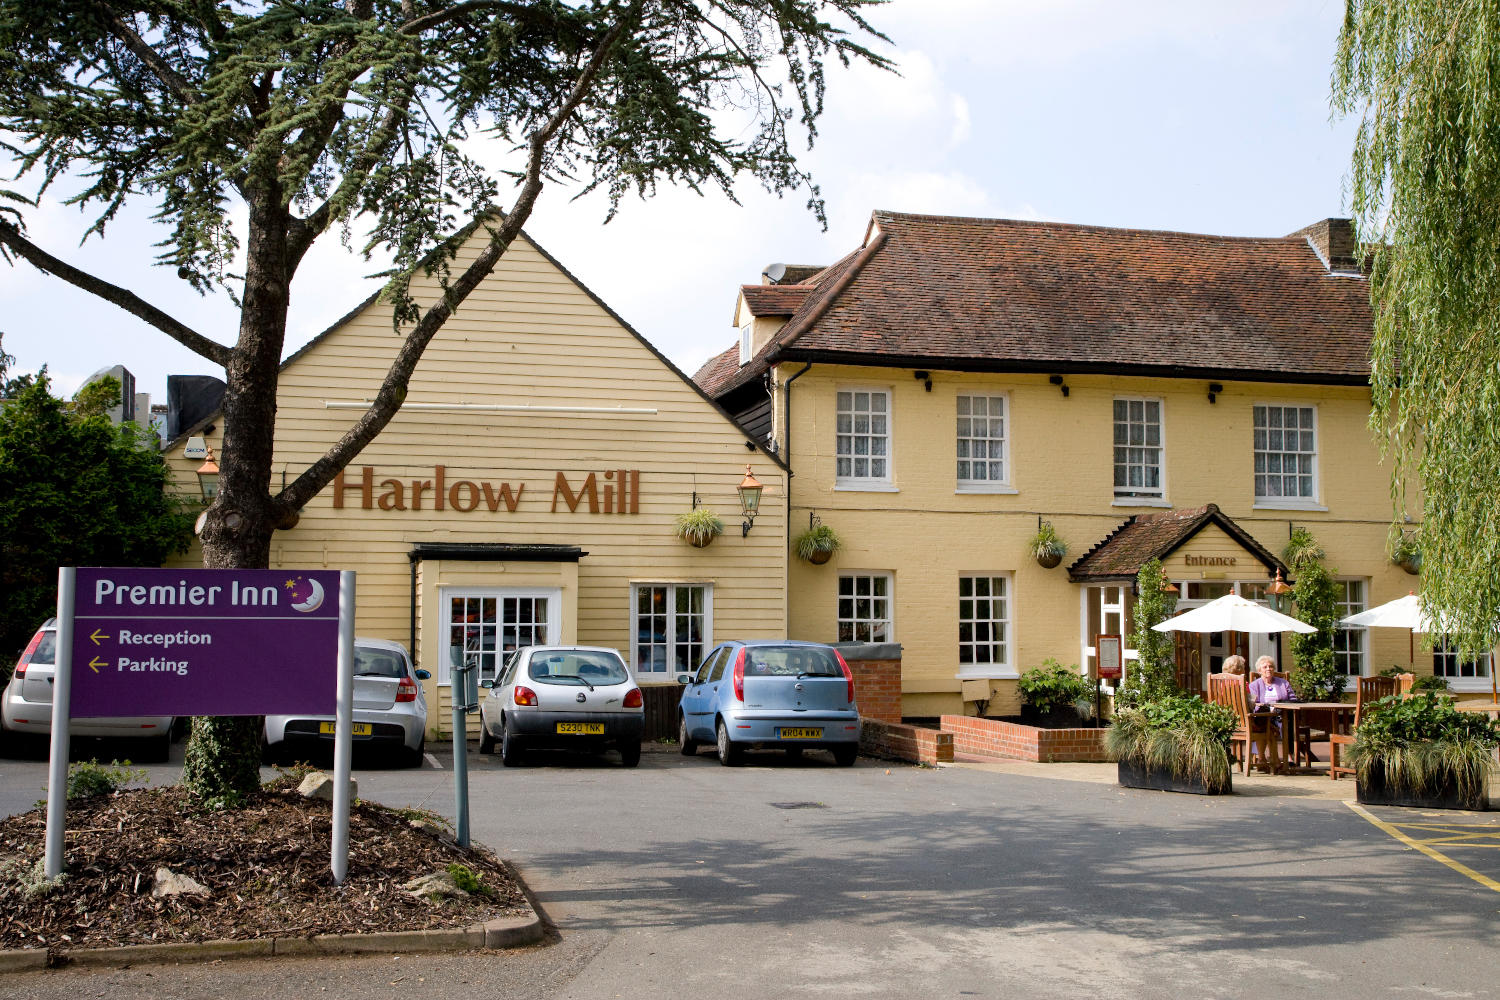 Beefeater restaurant Premier Inn Harlow North (Harlow Mill) hotel Harlow 03330 031693